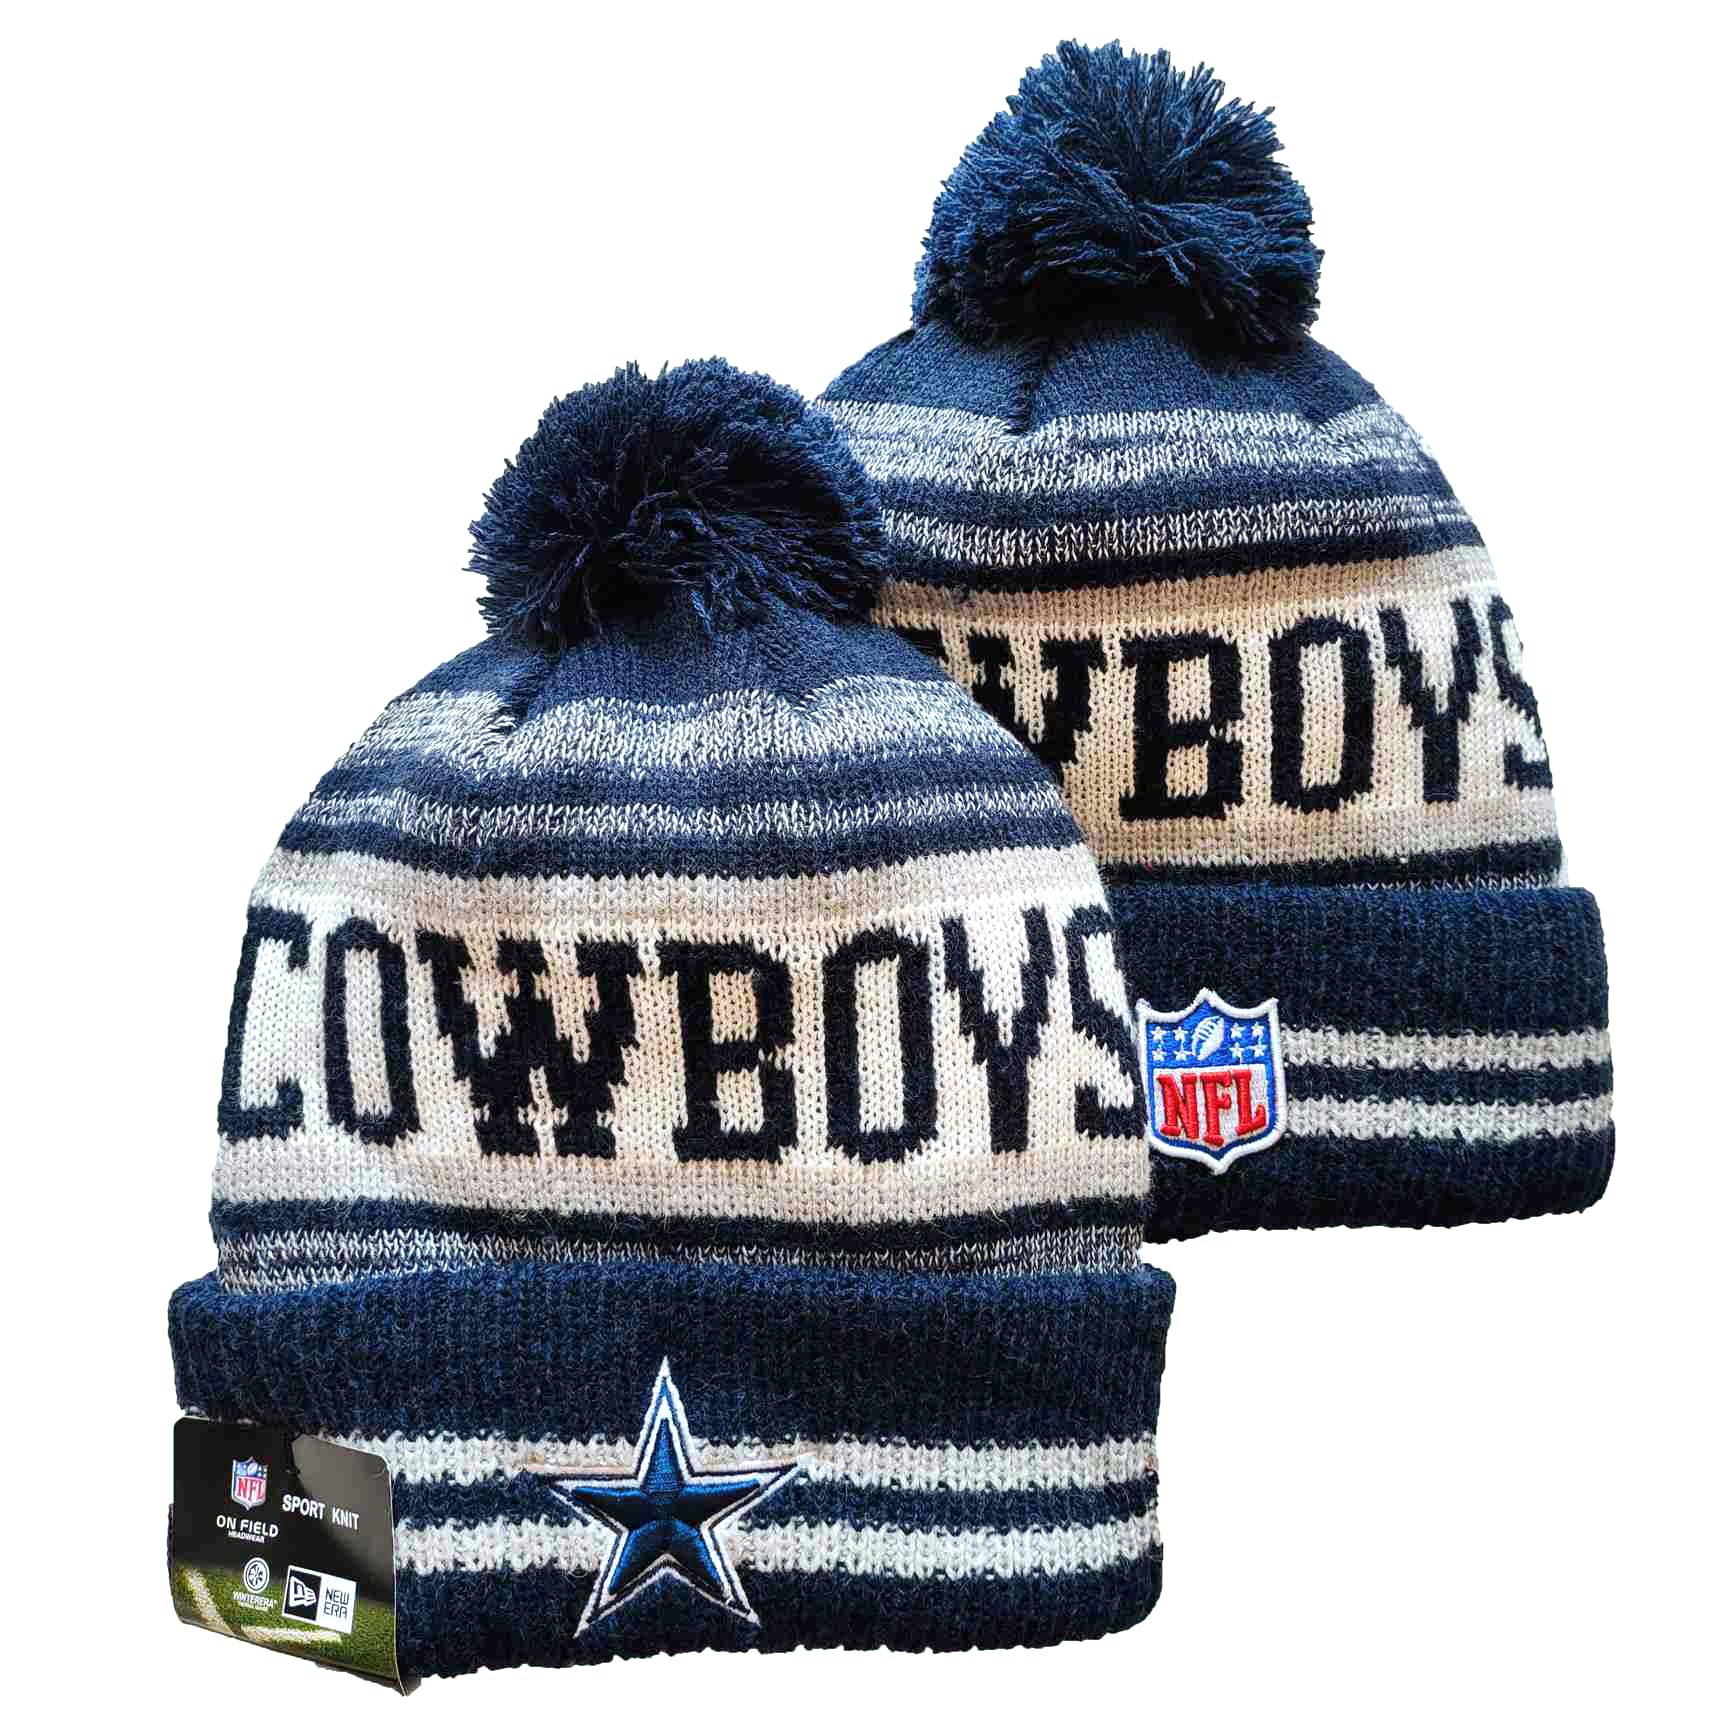 NFL Dallas Cowboys Beanies Knit Hats-YD975